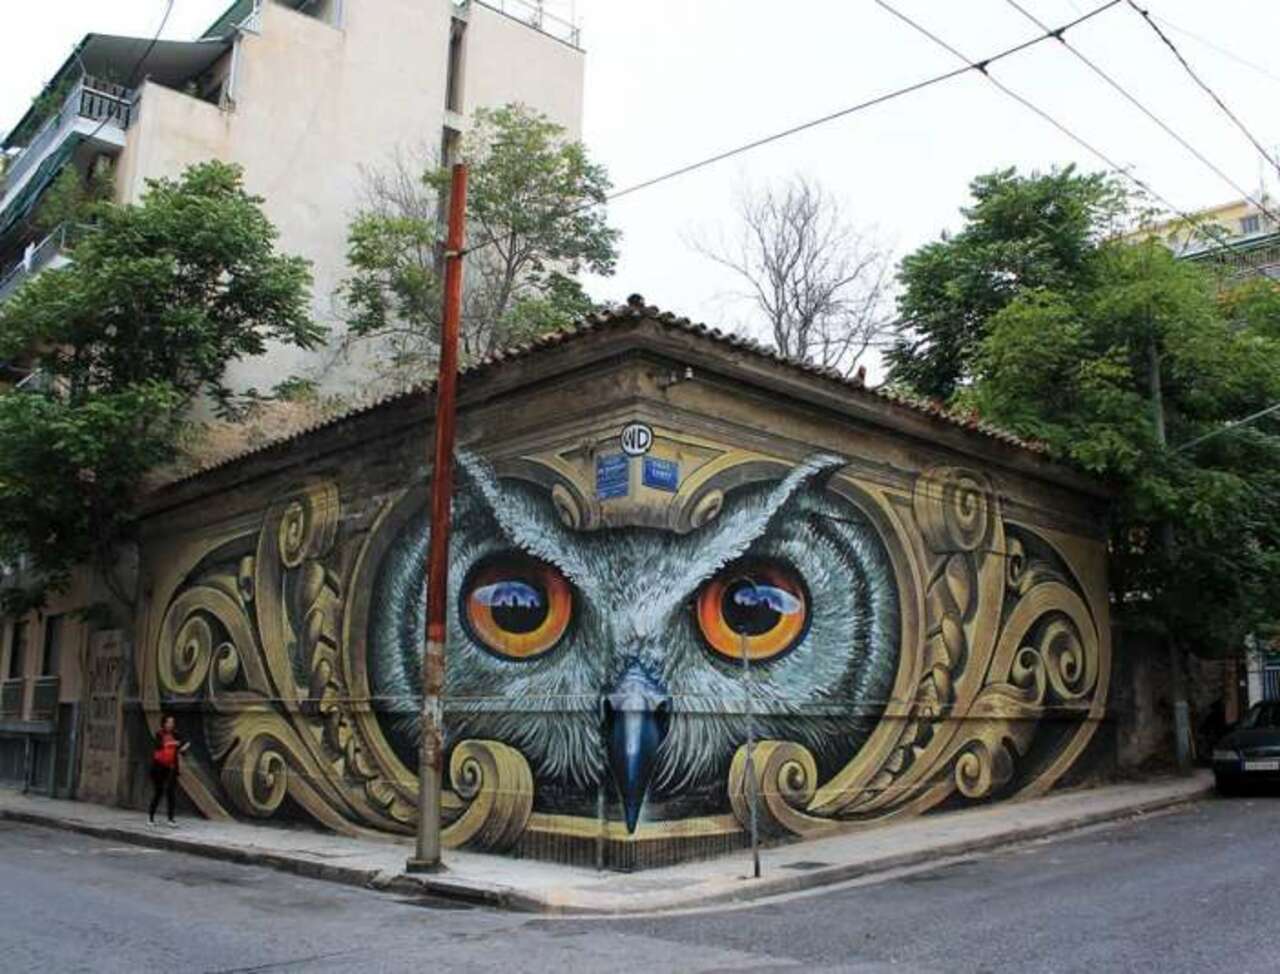 #Athens Amazing graffiti “Owl of Athens” goes viral https://goo.gl/fb/dYHEdl #Greece #StreetArt https://t.co/huGYNZHbK4